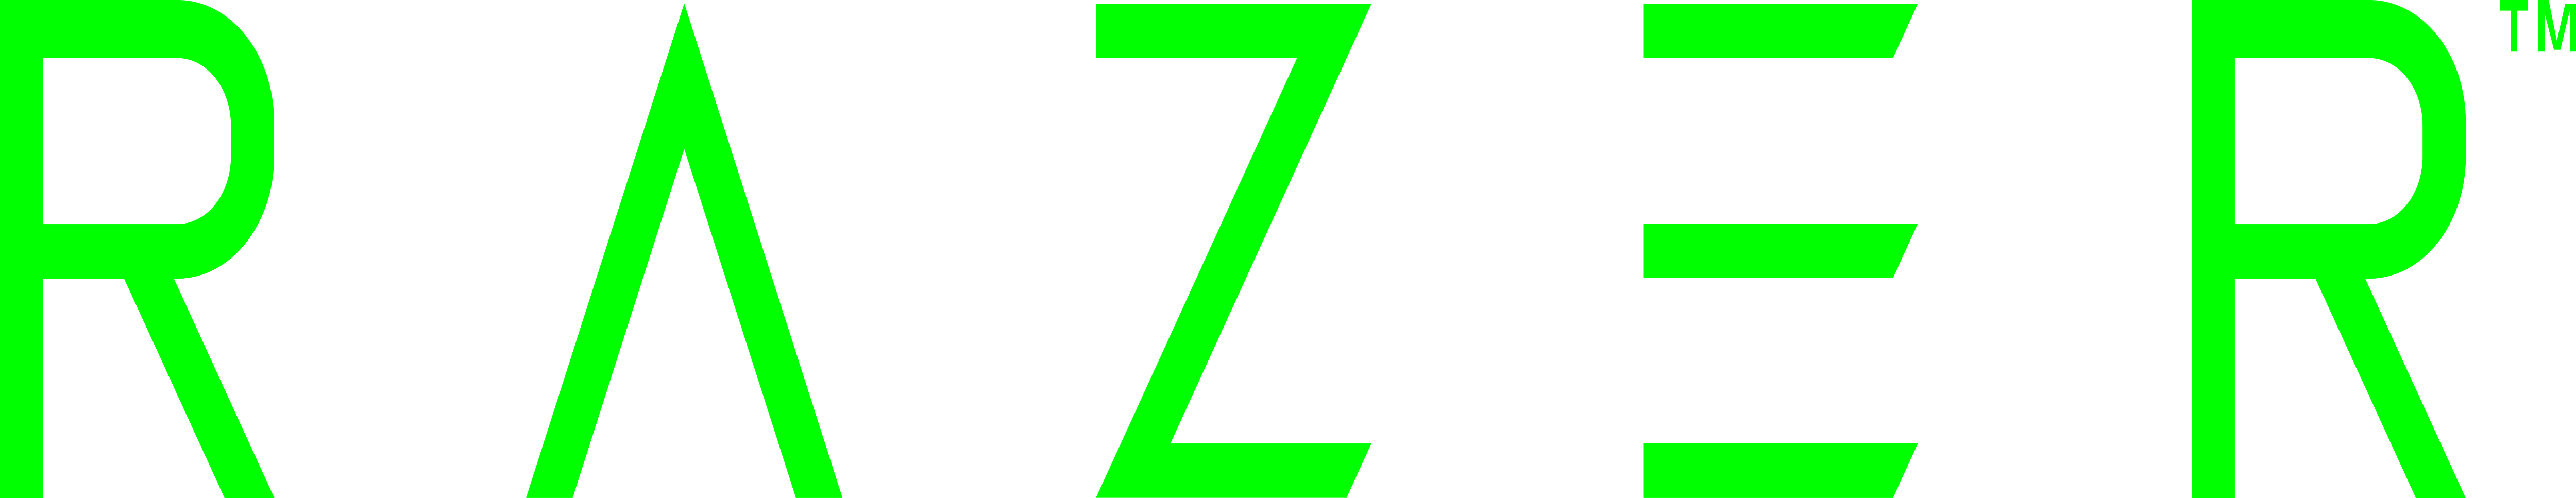 Razer – Logos Download